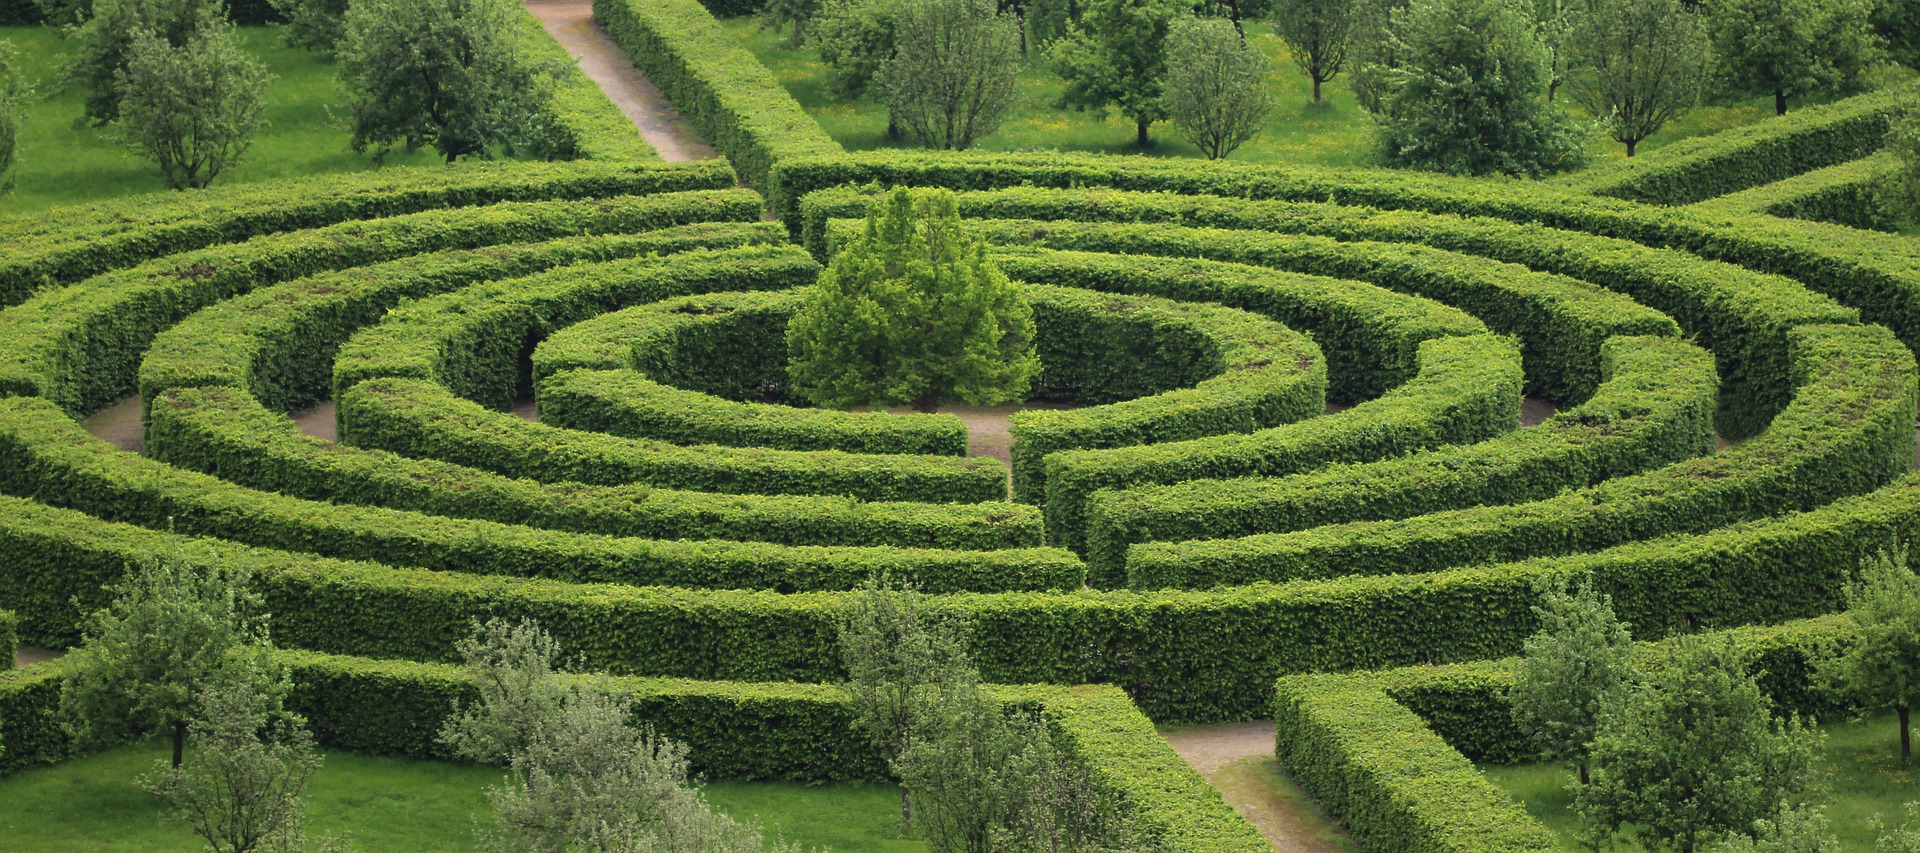 Labyrinth (c) www.pixabay.com